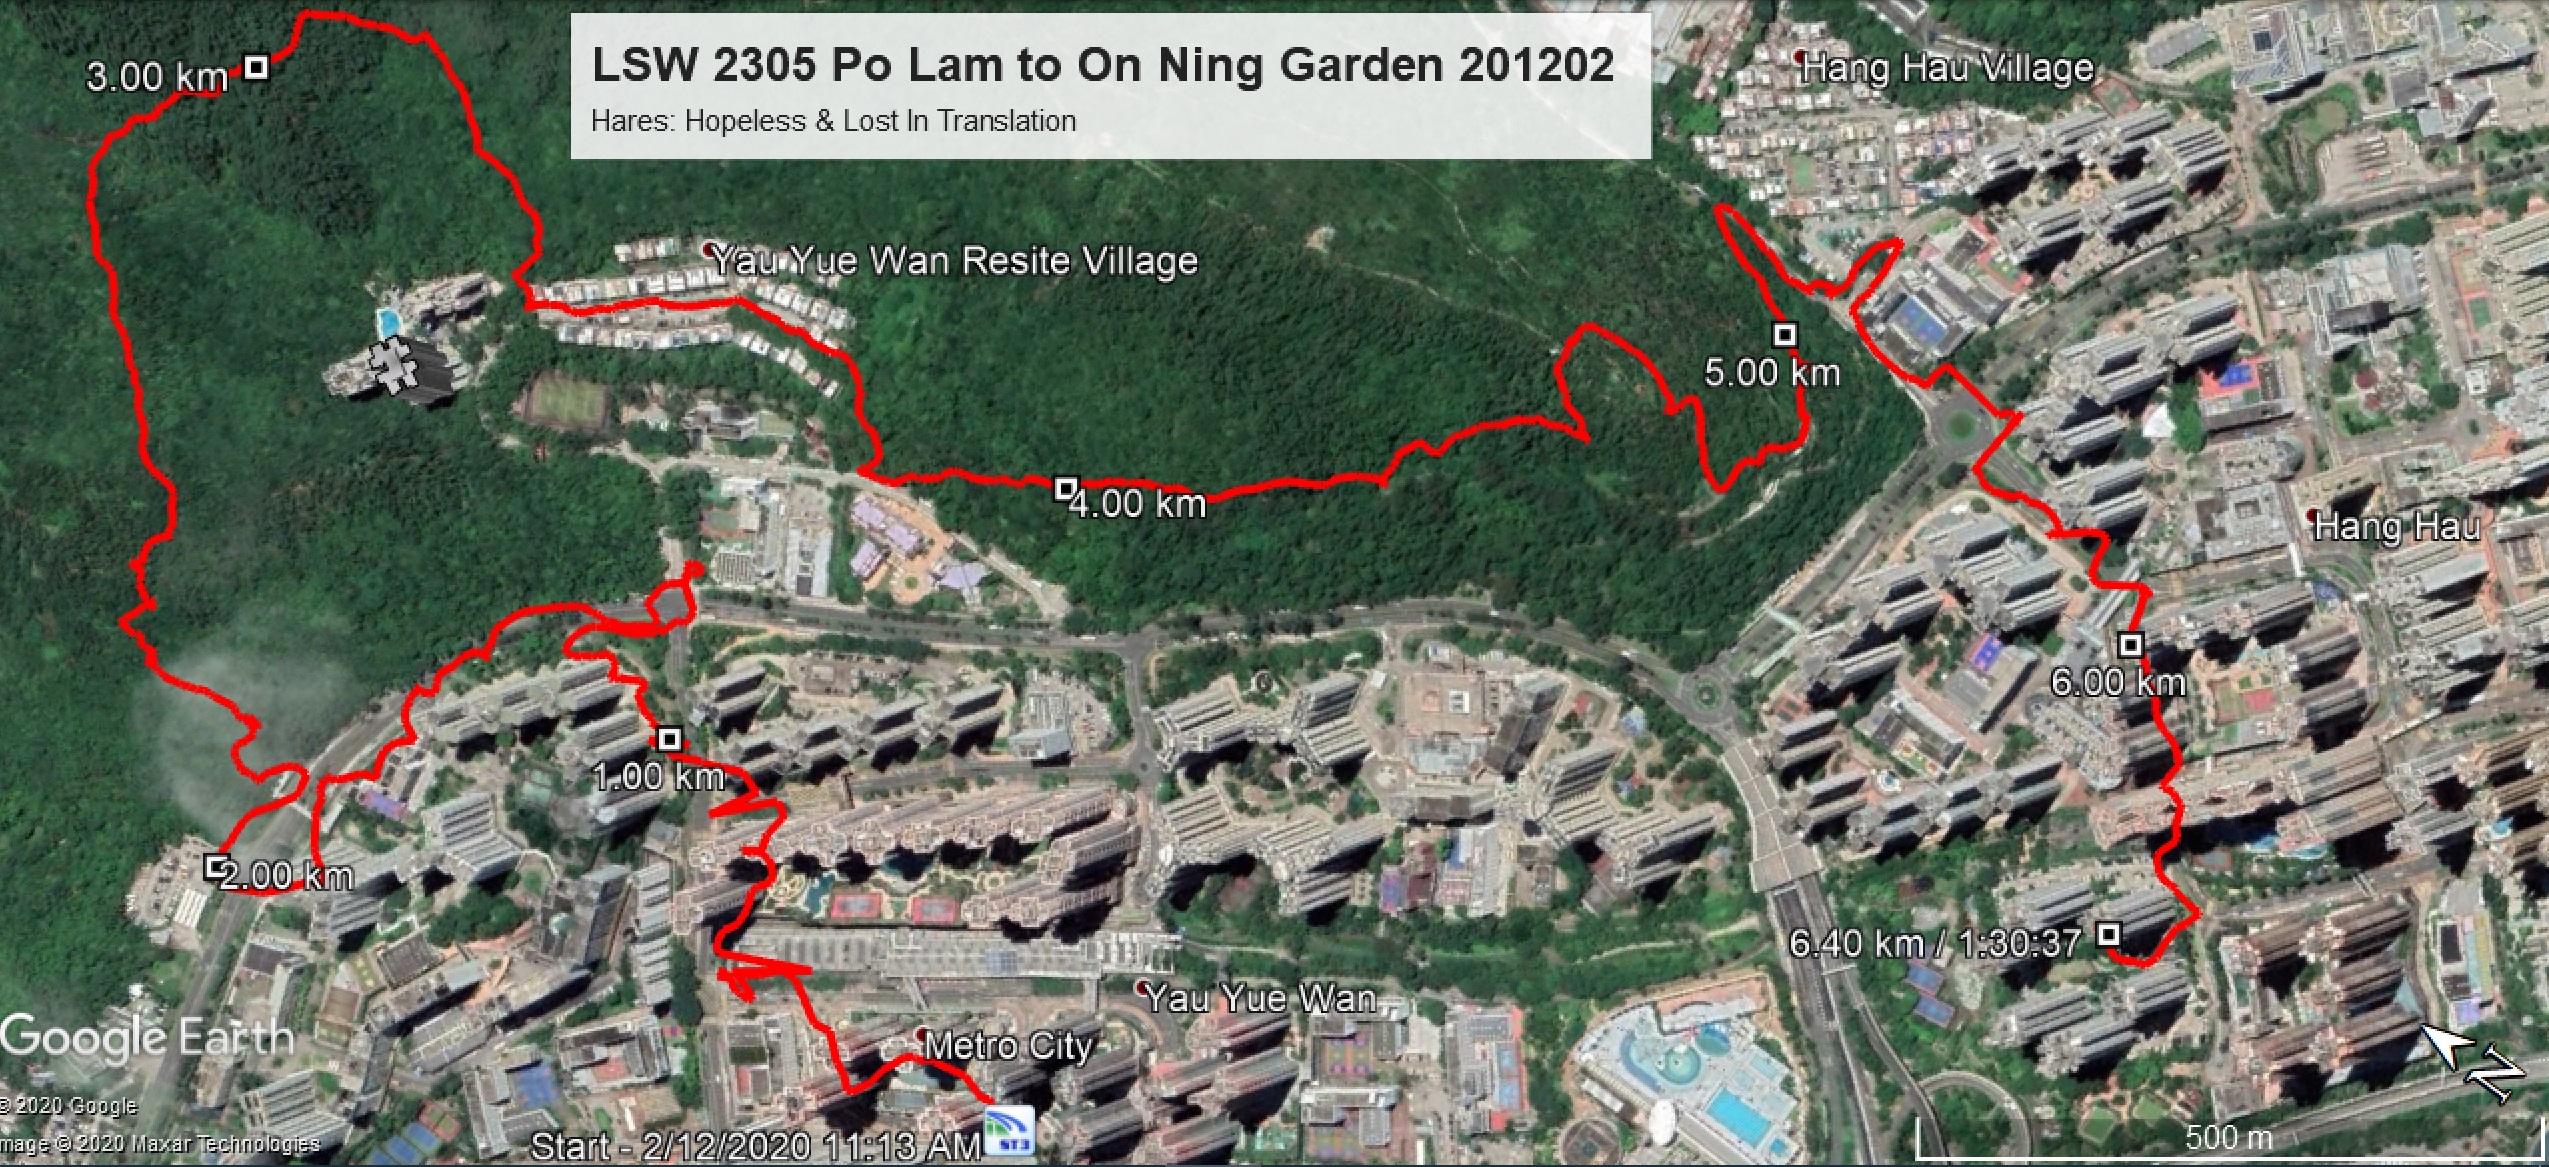 Po Lam to On Ning Garden 201202 6.40km